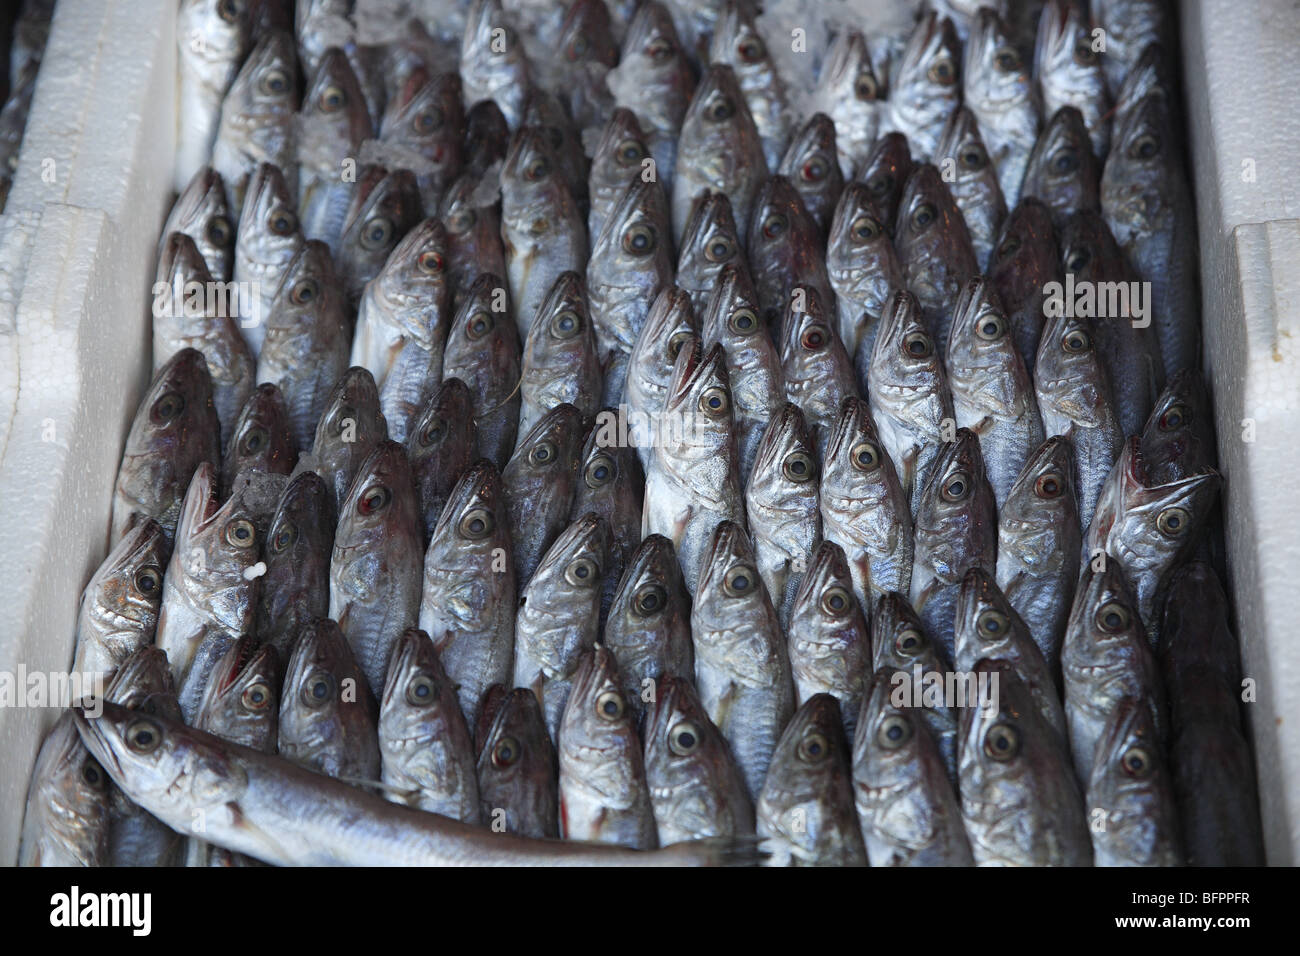 Display of sardines in the market of the Avni Rustemi district of Tirana, Albania Stock Photo